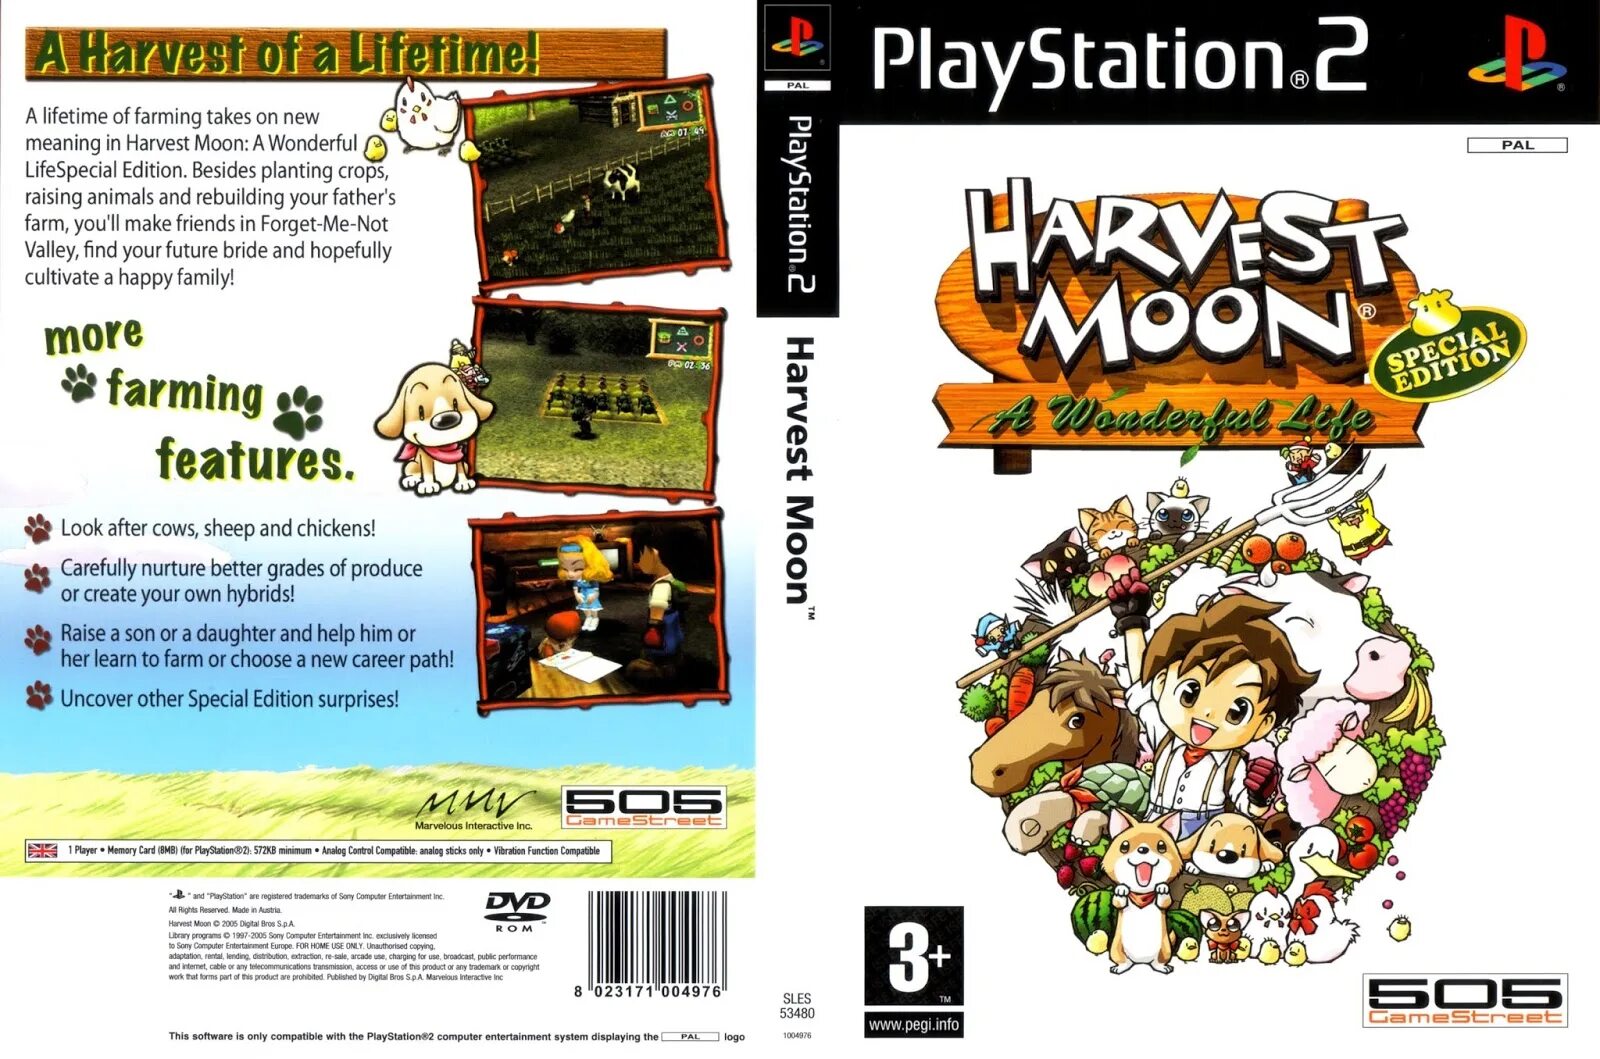 Harvest Moon: a wonderful Life ps2. Harvest Moon a wonderful Life Special Edition. Harvest Moon обложка. Harvest Moon Snes обложка.